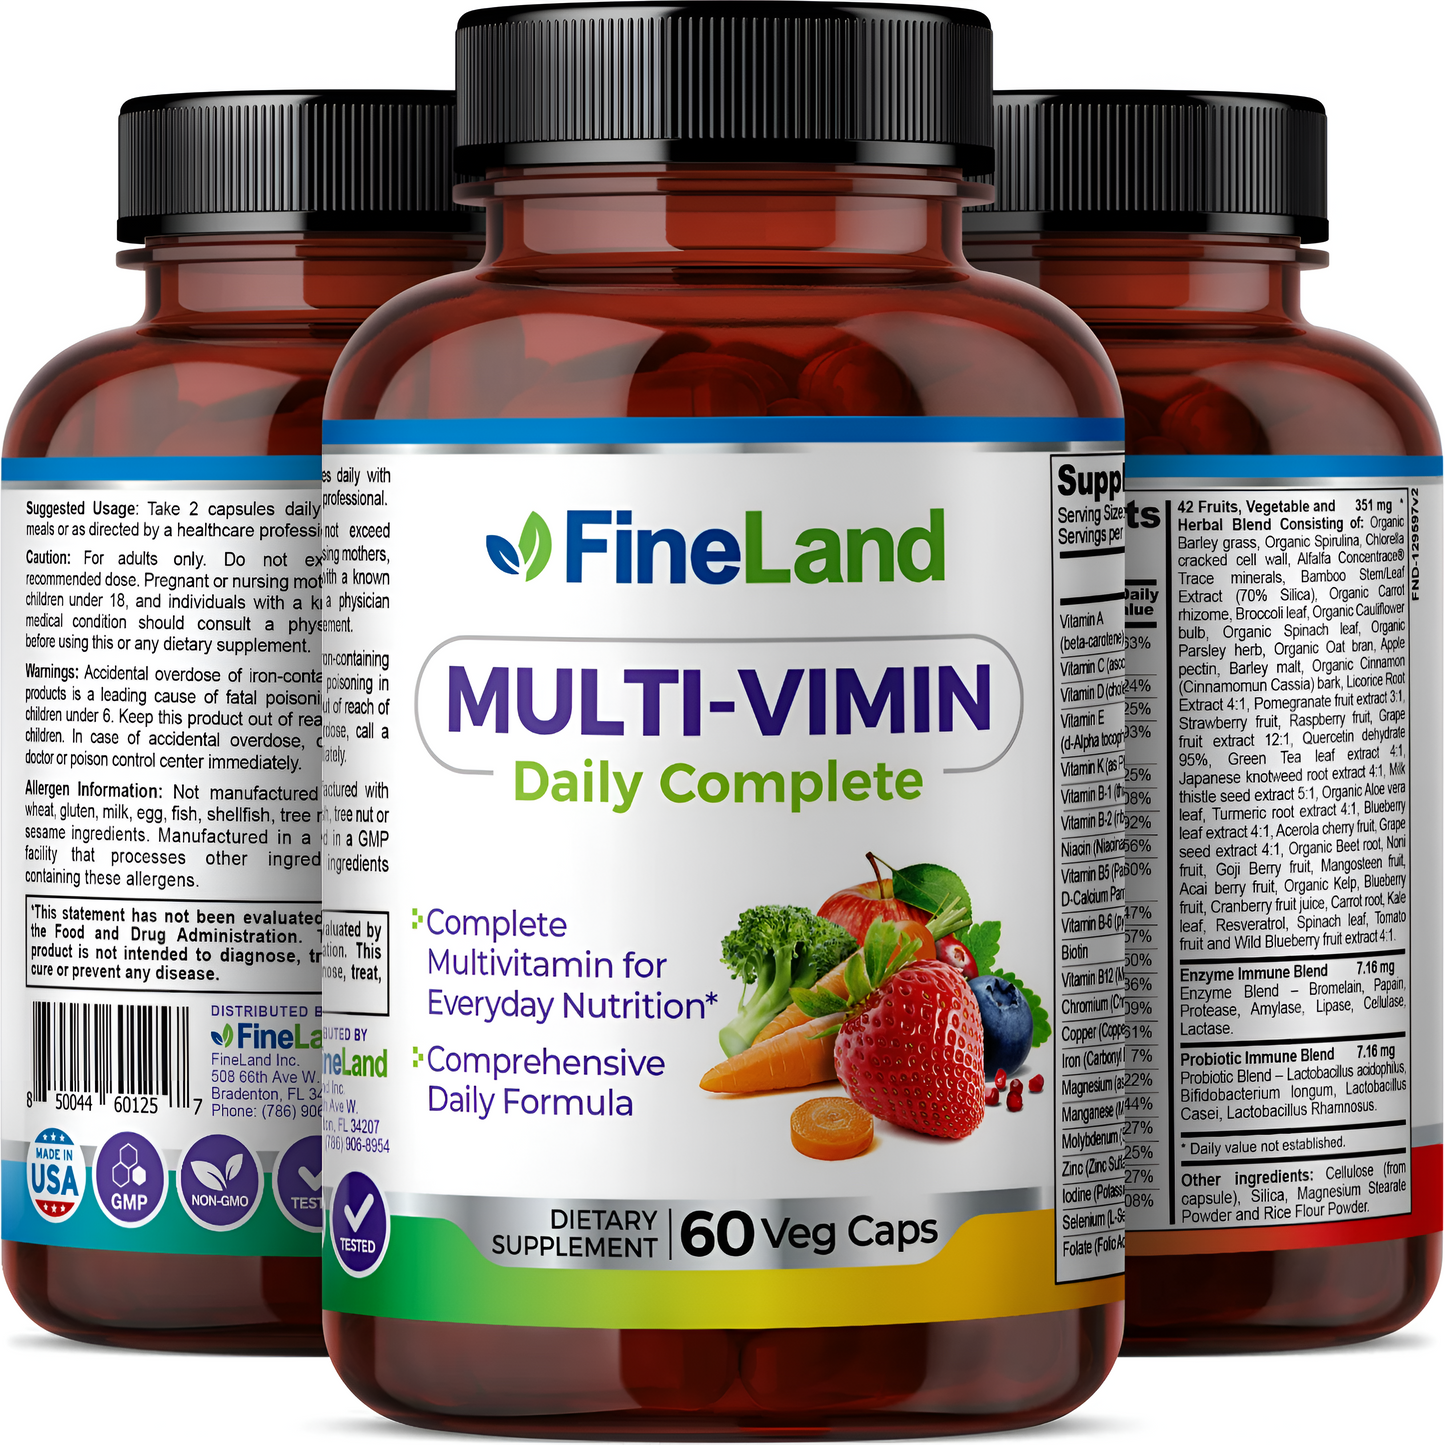 Multi-vimin, multivitamina Diaria completa - Fineland , 60 caps vegetales